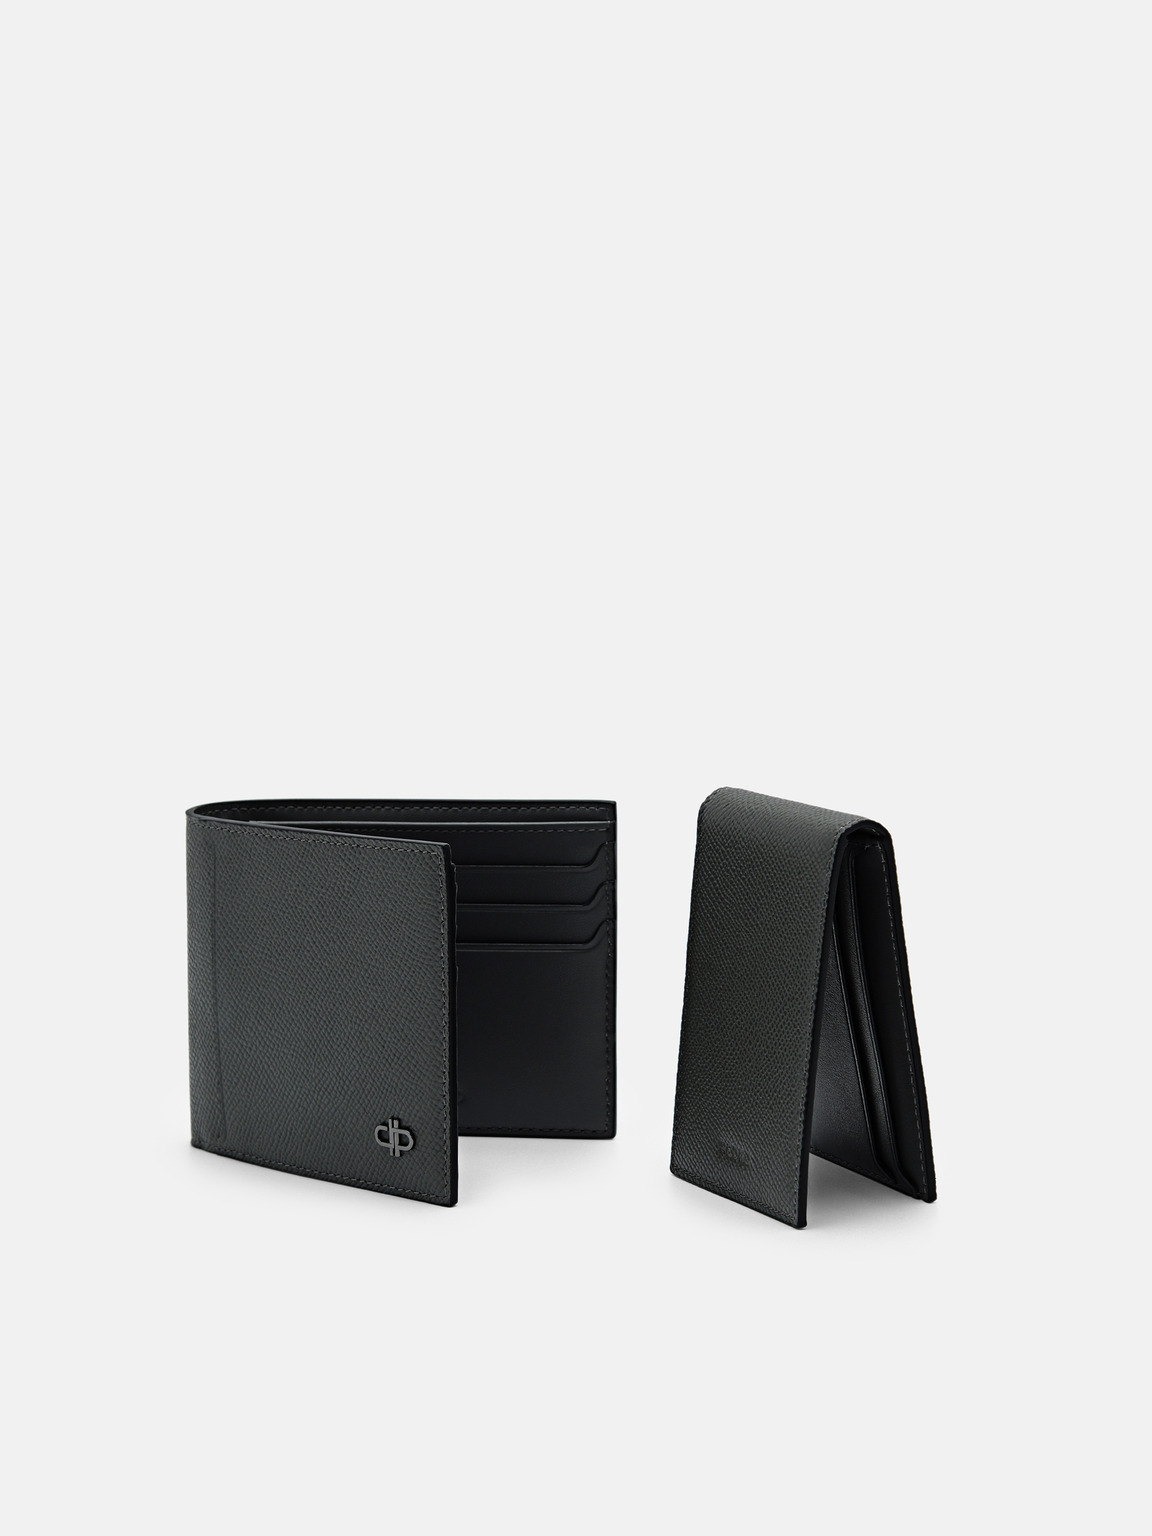 PEDRO Icon Leather Bi-Fold Wallet with Insert, Dark Grey